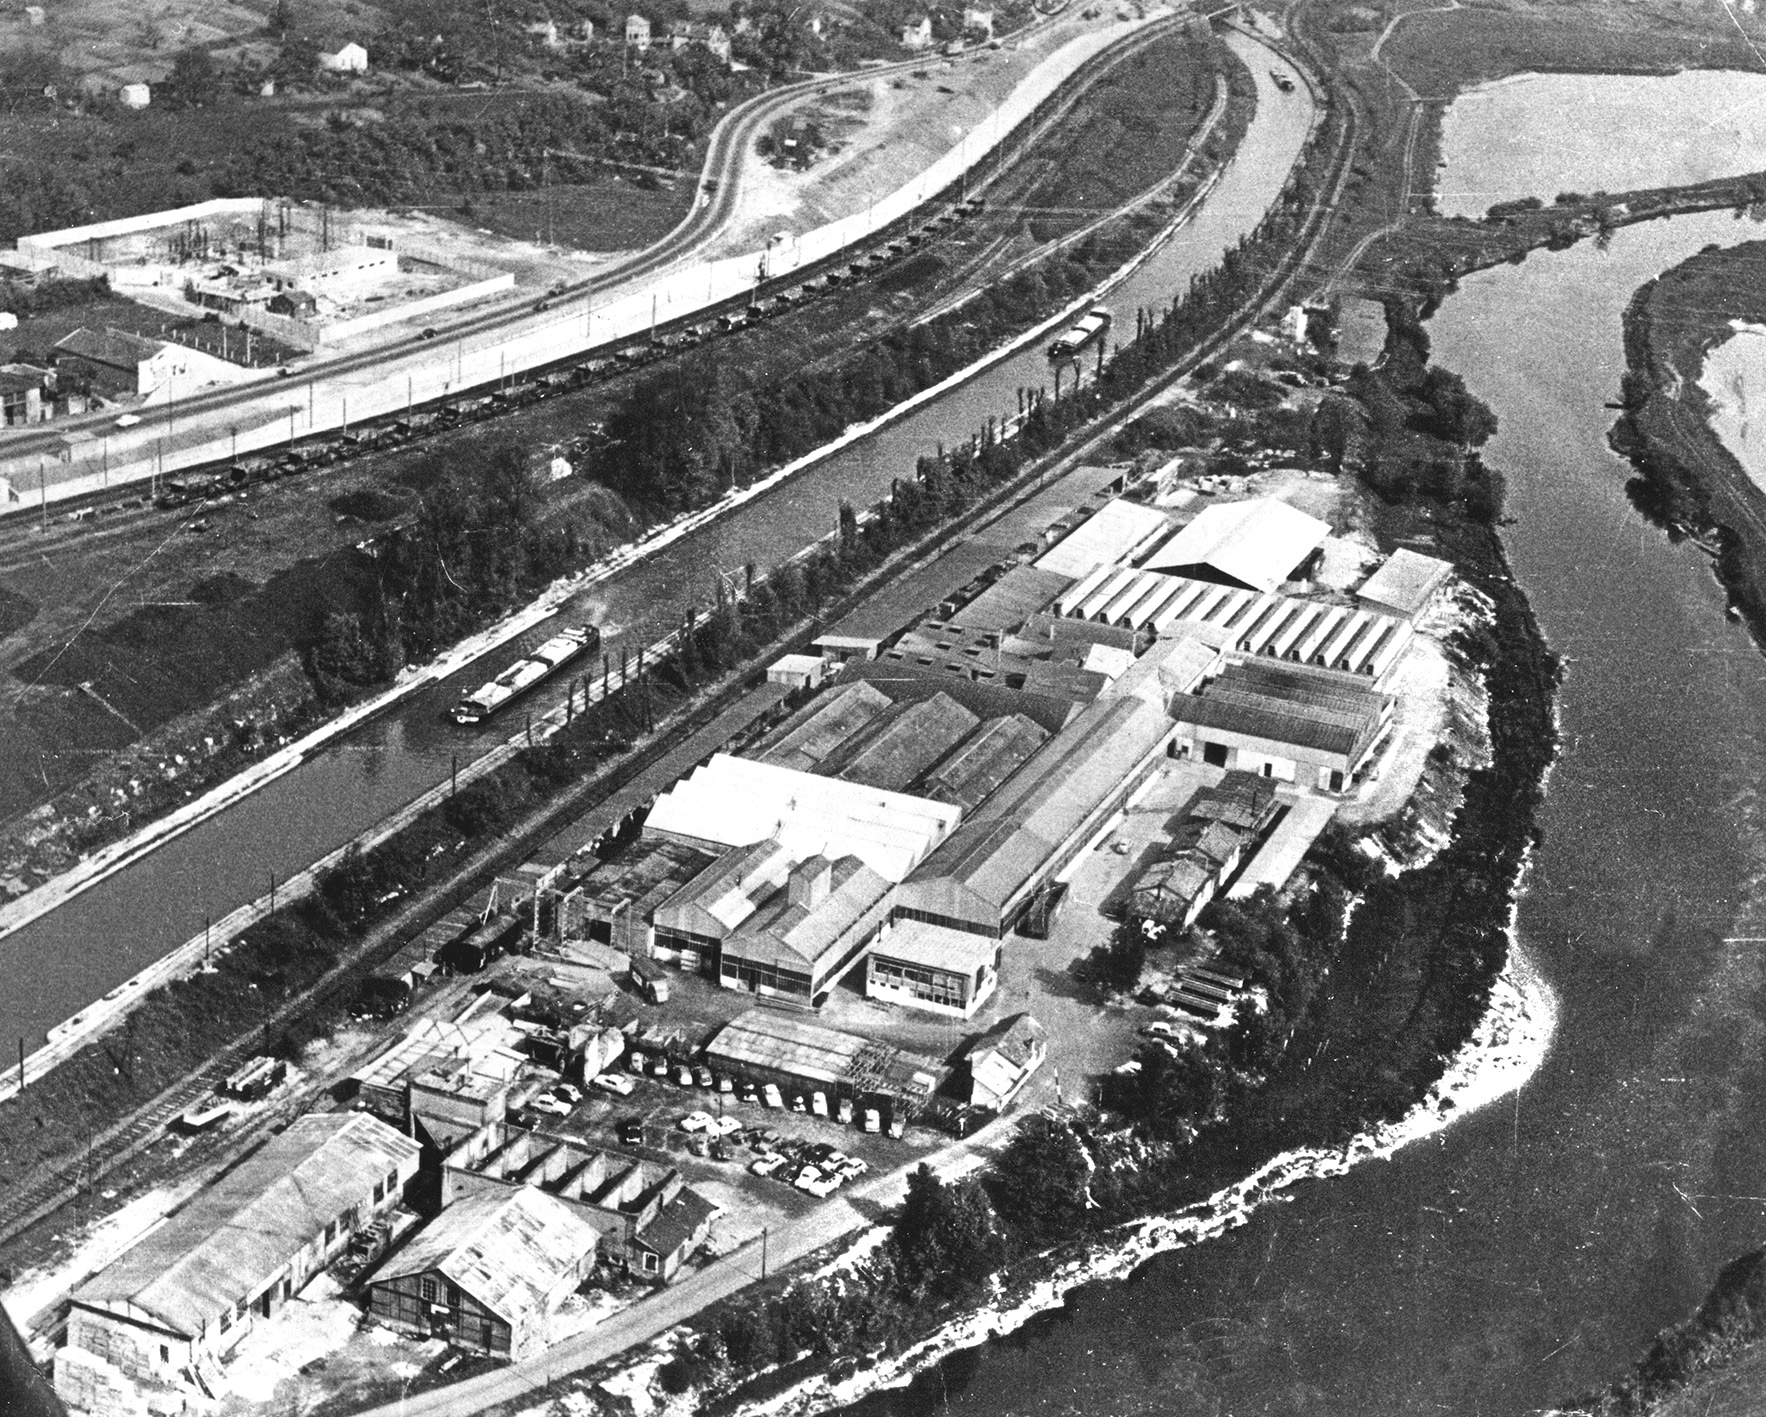 Ateliers Jean Prouvé, Maxéville. Aerial view, after 1957.